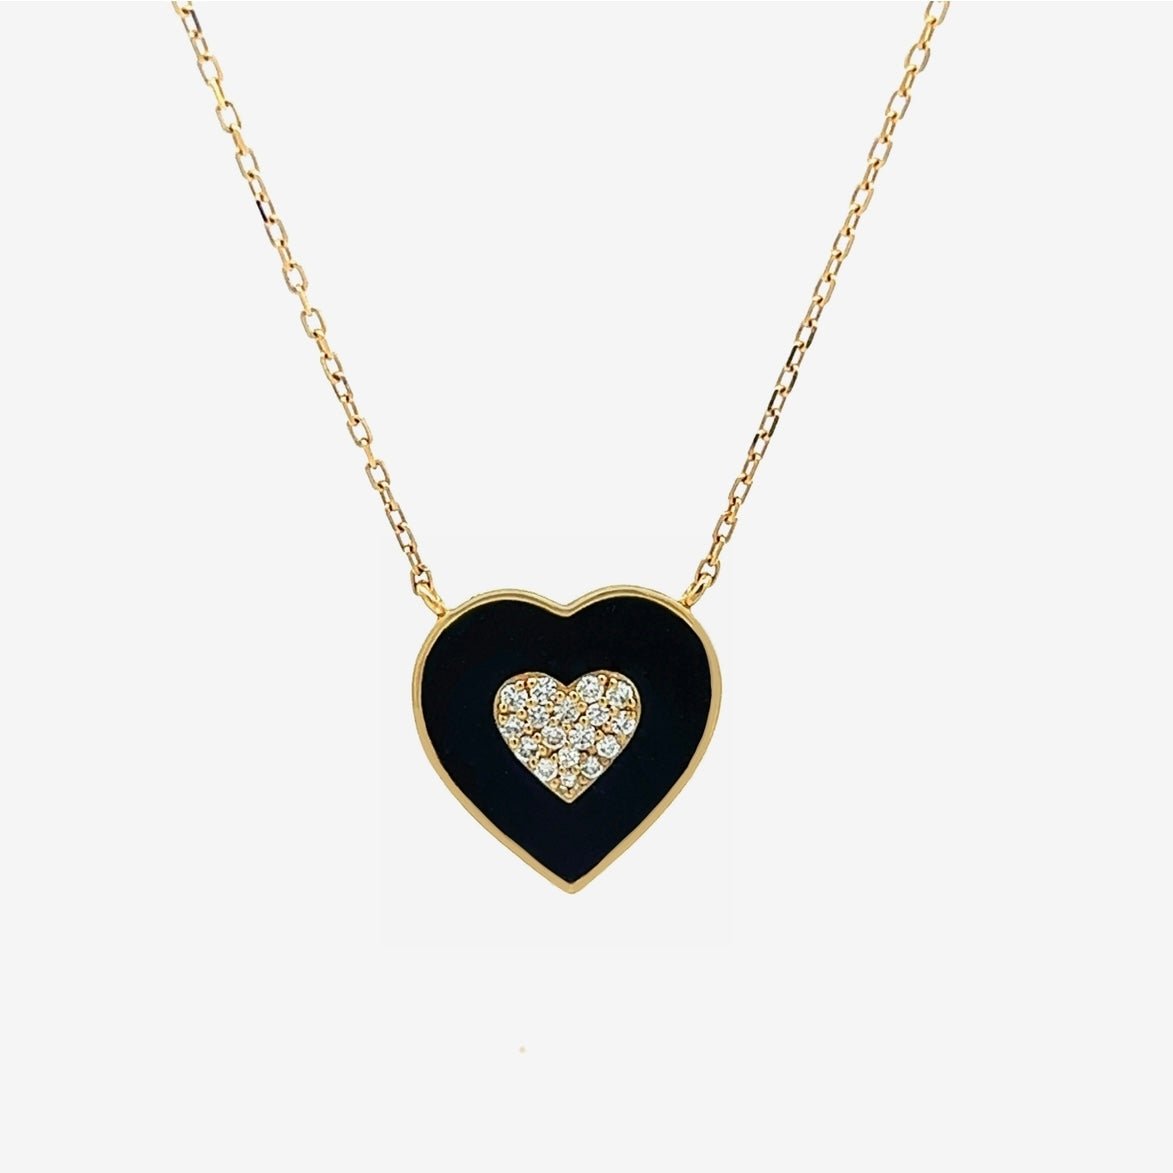 Mina Heart Necklace in Diamond - 18k Gold - Ly